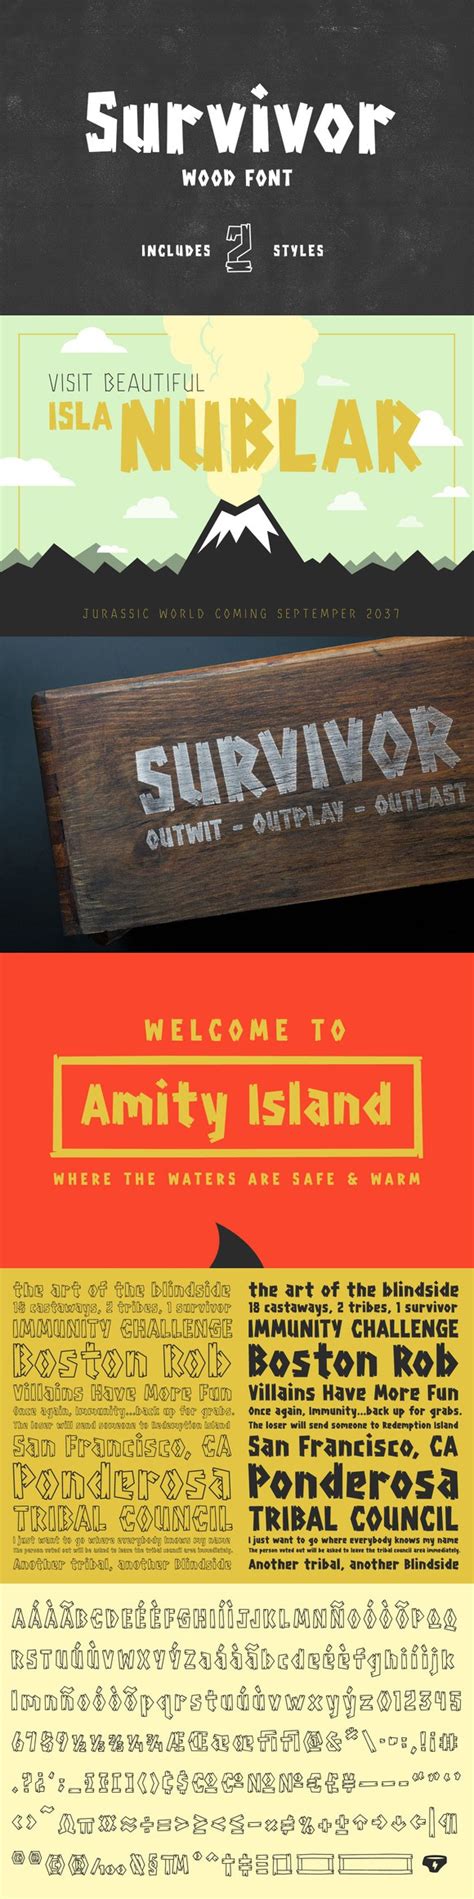 Survivor Wood Font Display Fonts Jurassic World Survivor